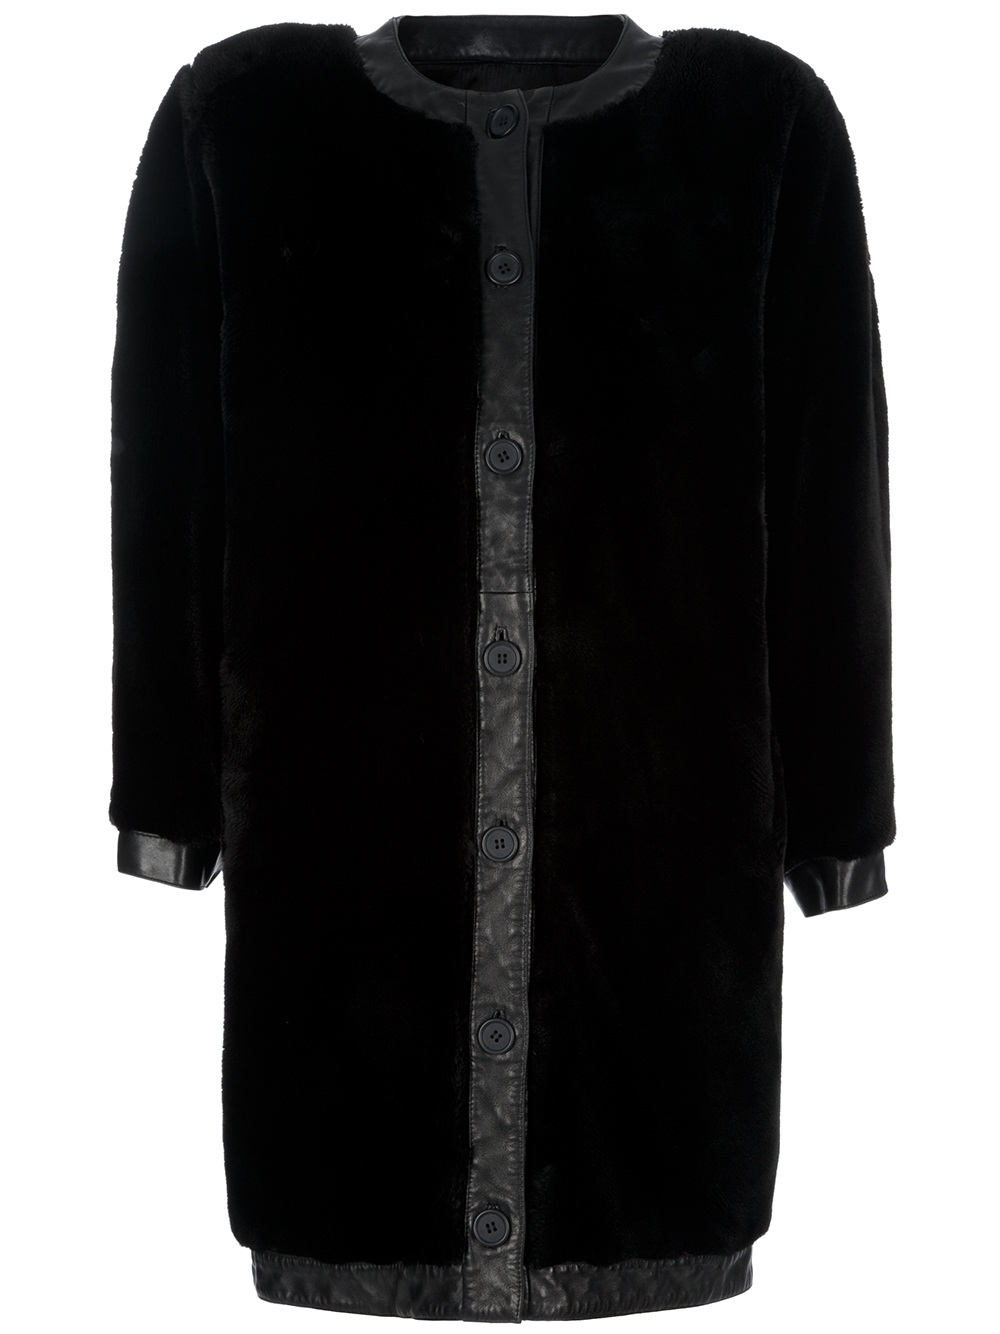 Louis Feraud Vintage Shearling Coat in Black | Lyst